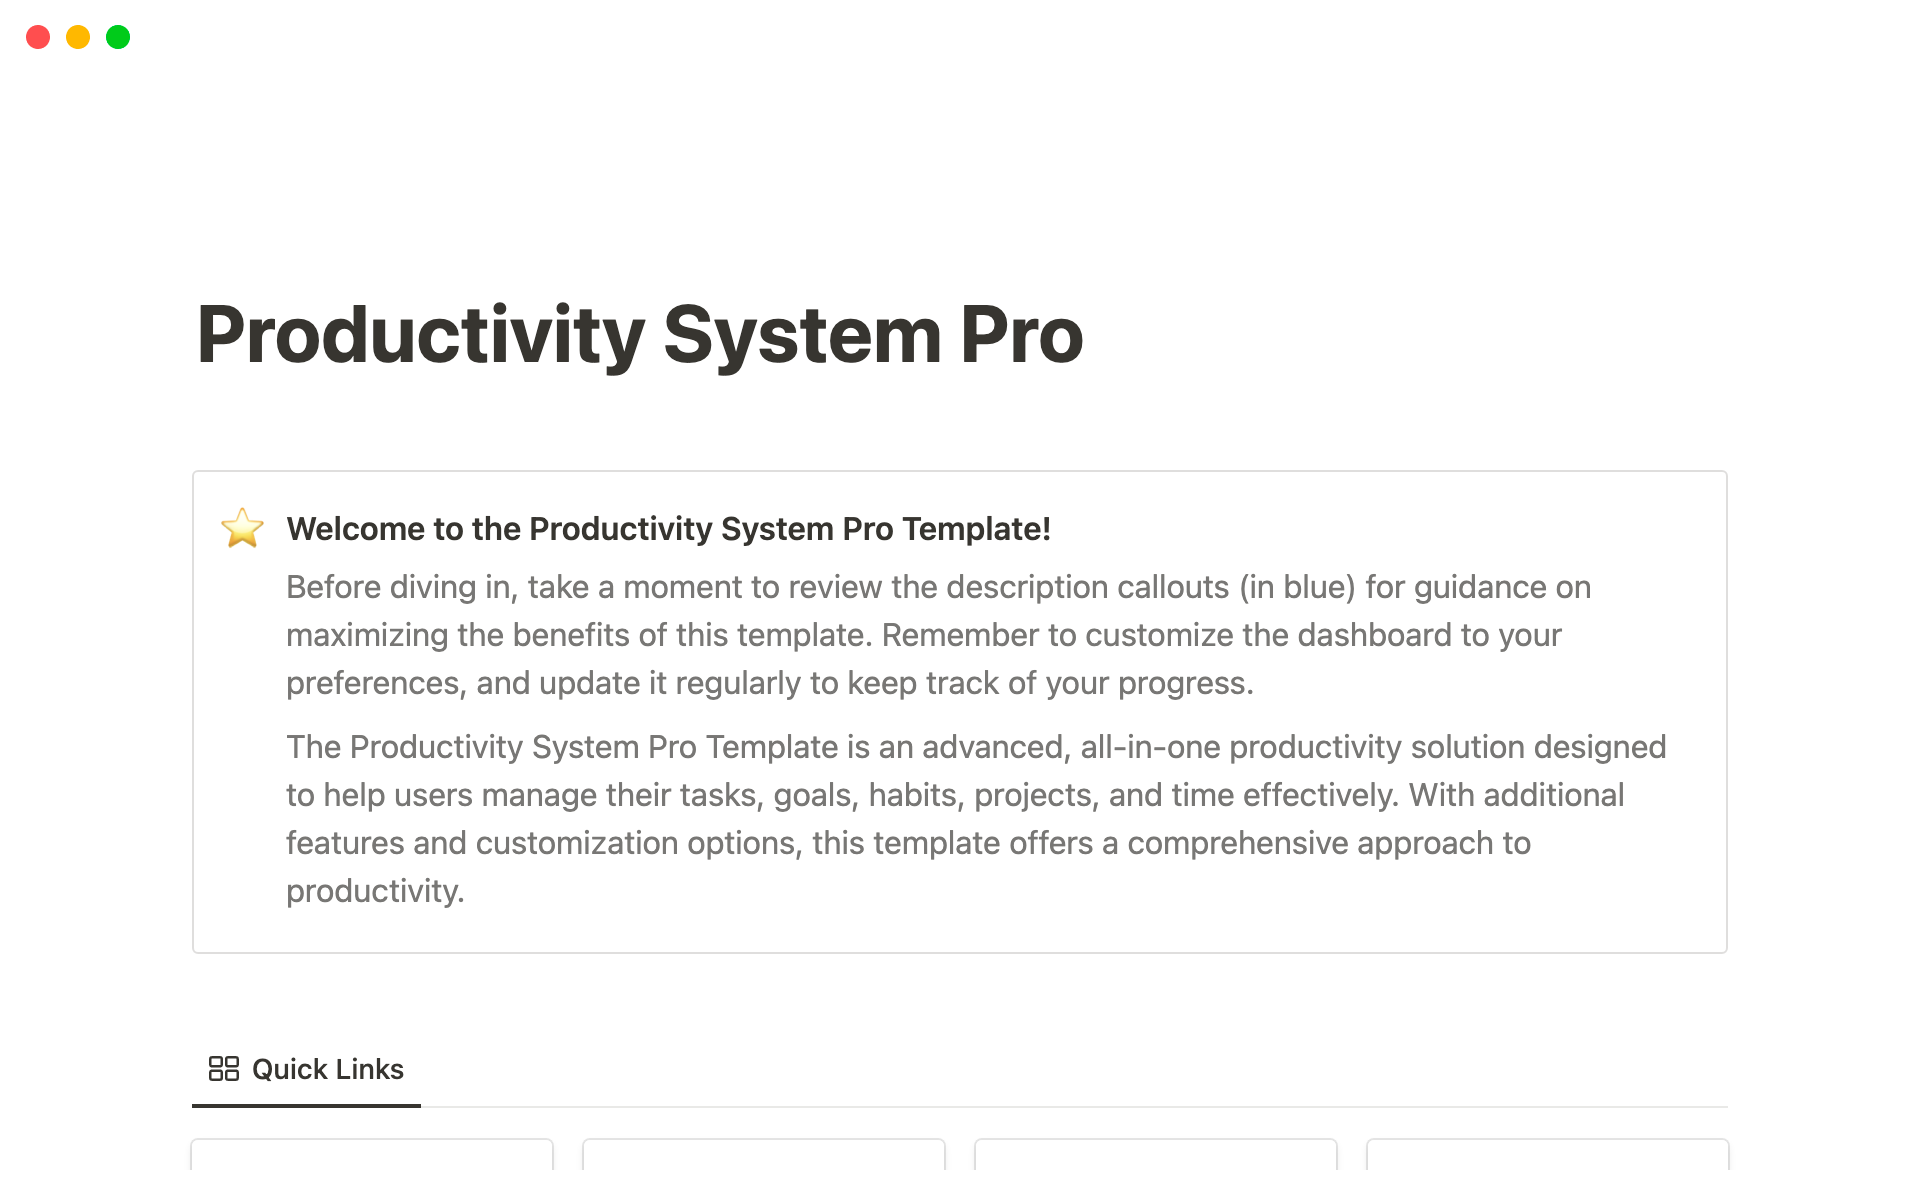 Vista previa de una plantilla para Productivity System Pro